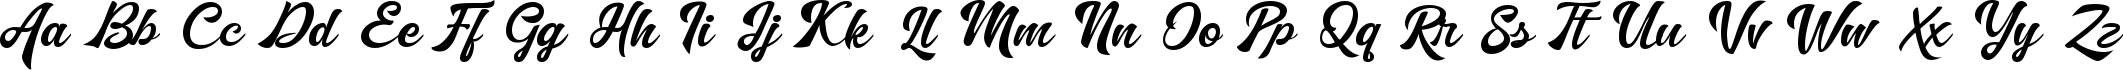 Пример написания английского алфавита шрифтом Willian